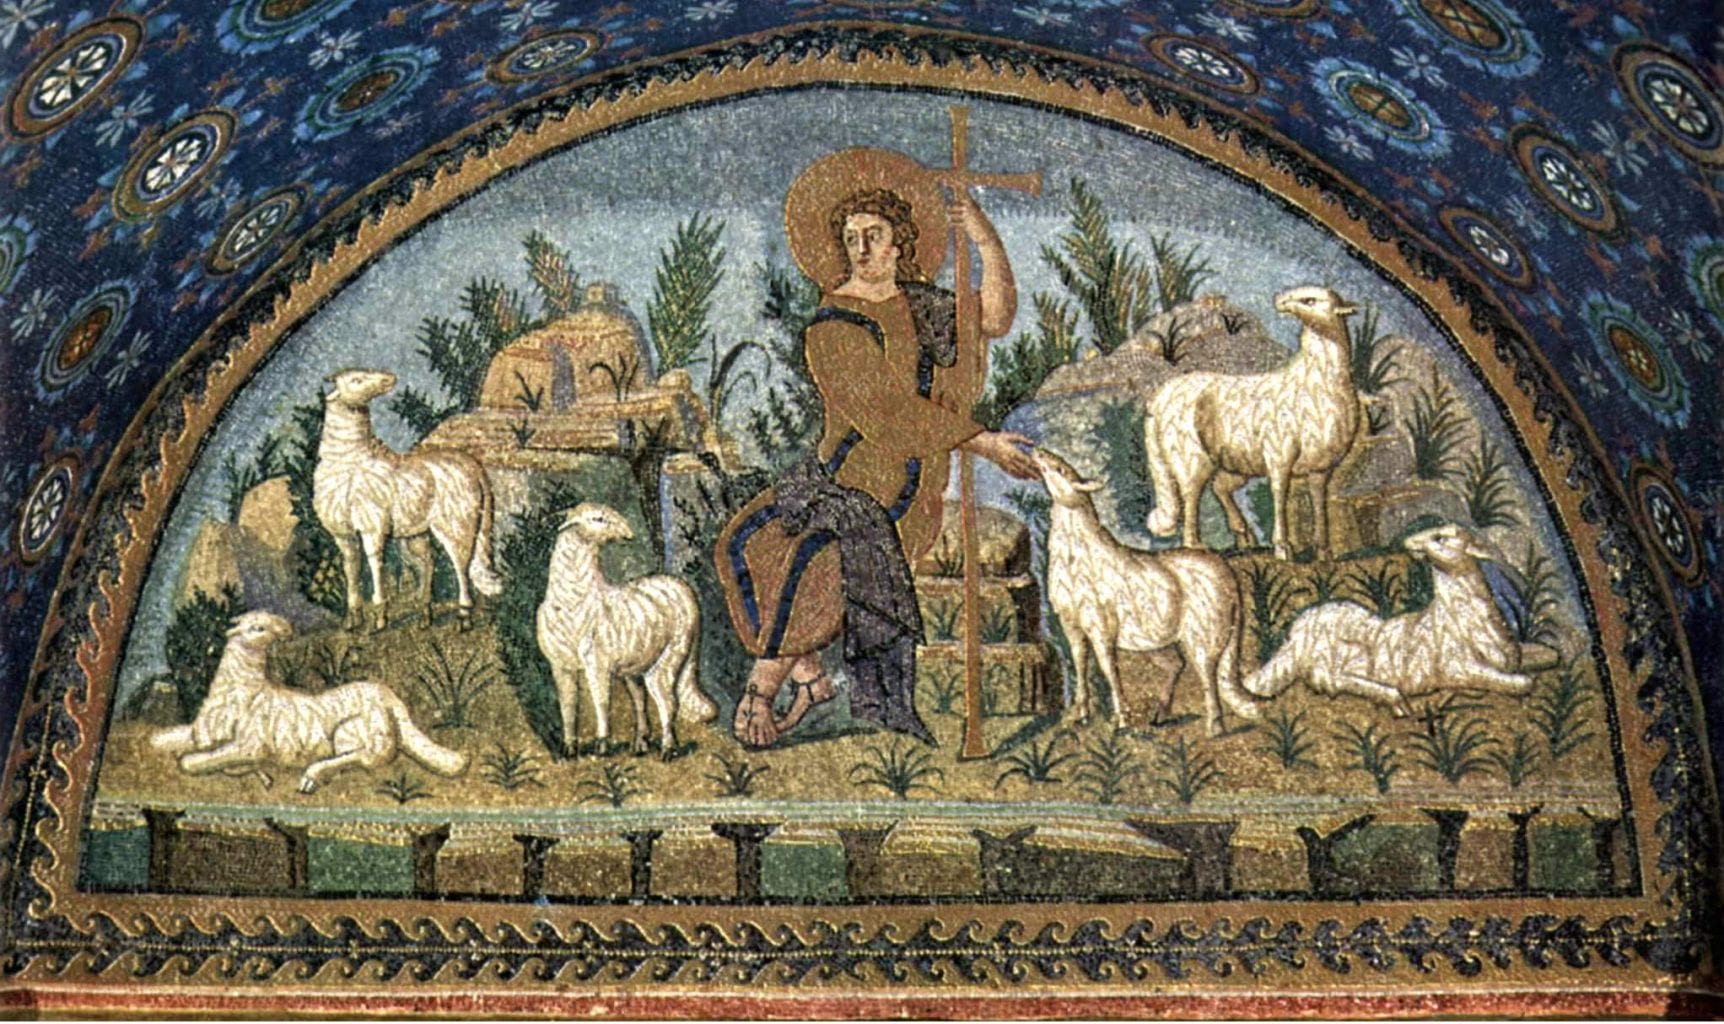 To Shepherd the Sheep